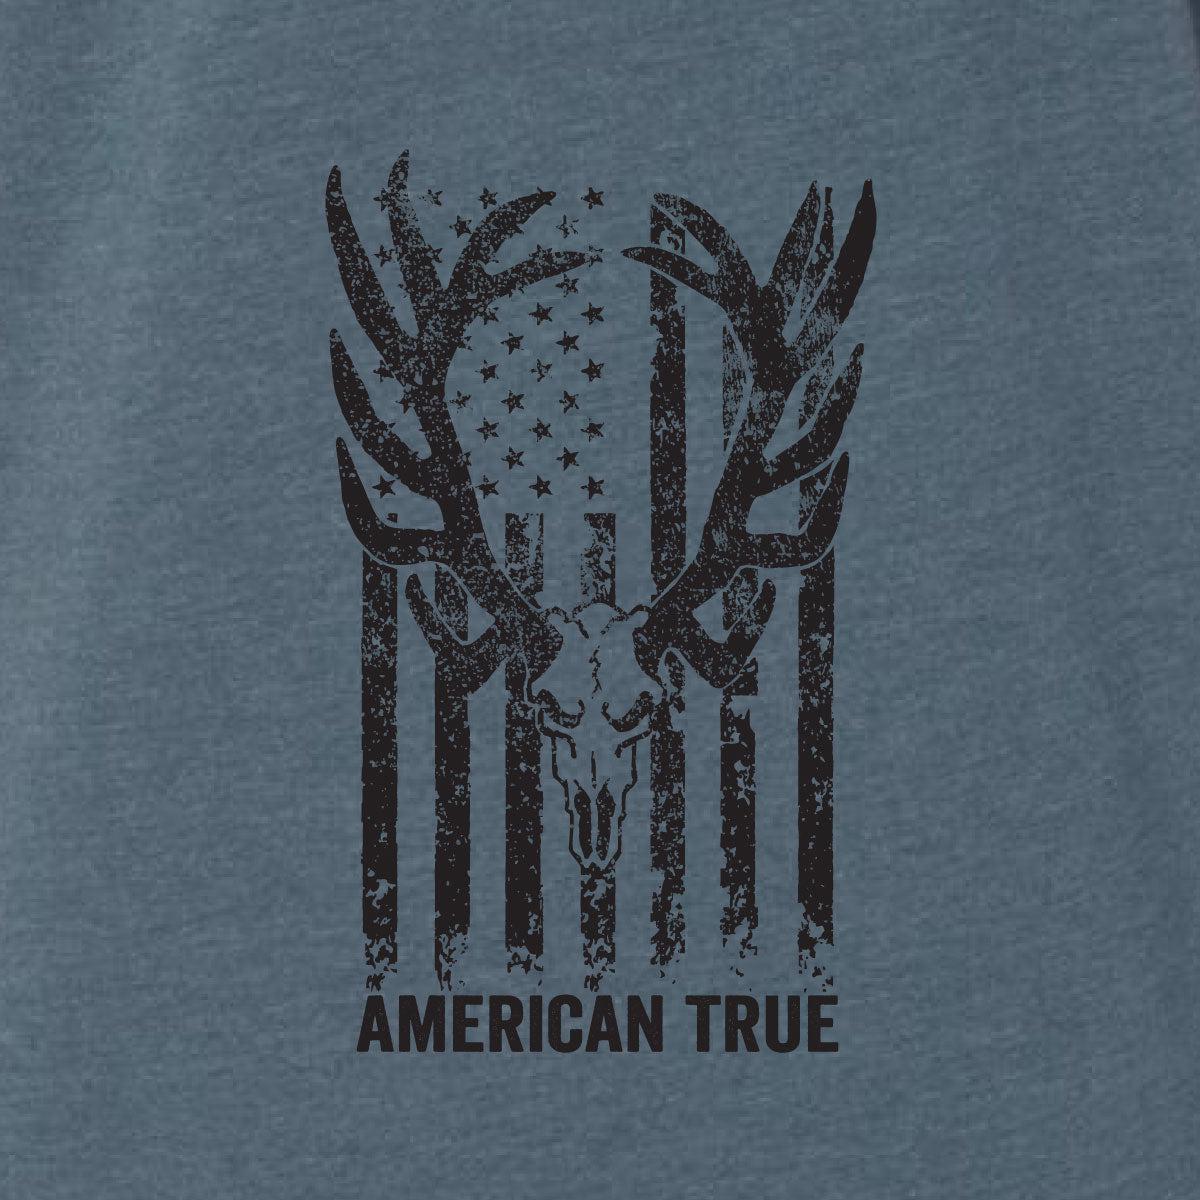 Elk Assassins - American True OD